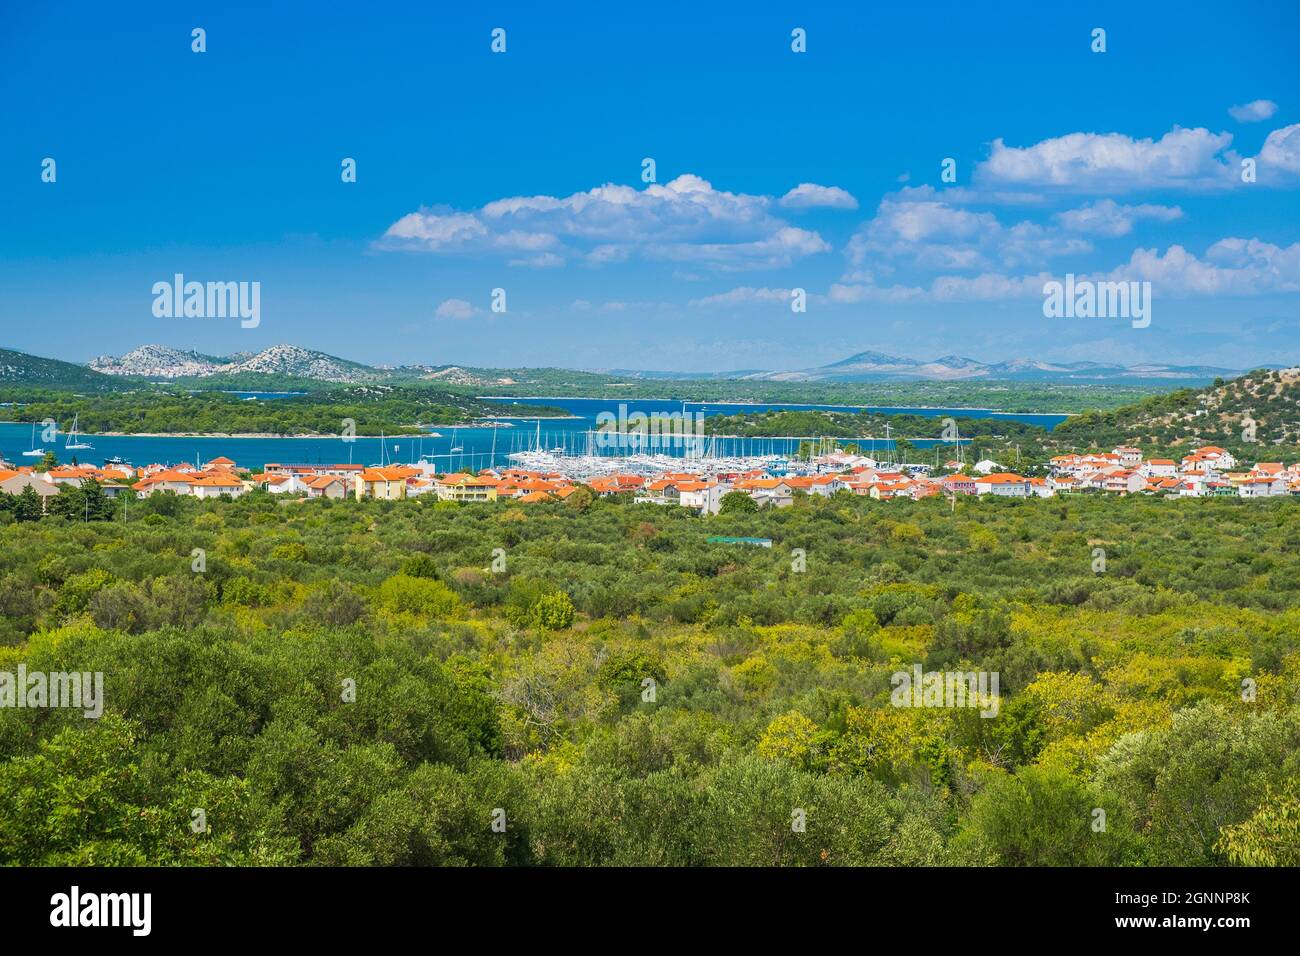 Aerial view od town of Betina on the island of Murter, Dalmatia, Croatia Stock Photo